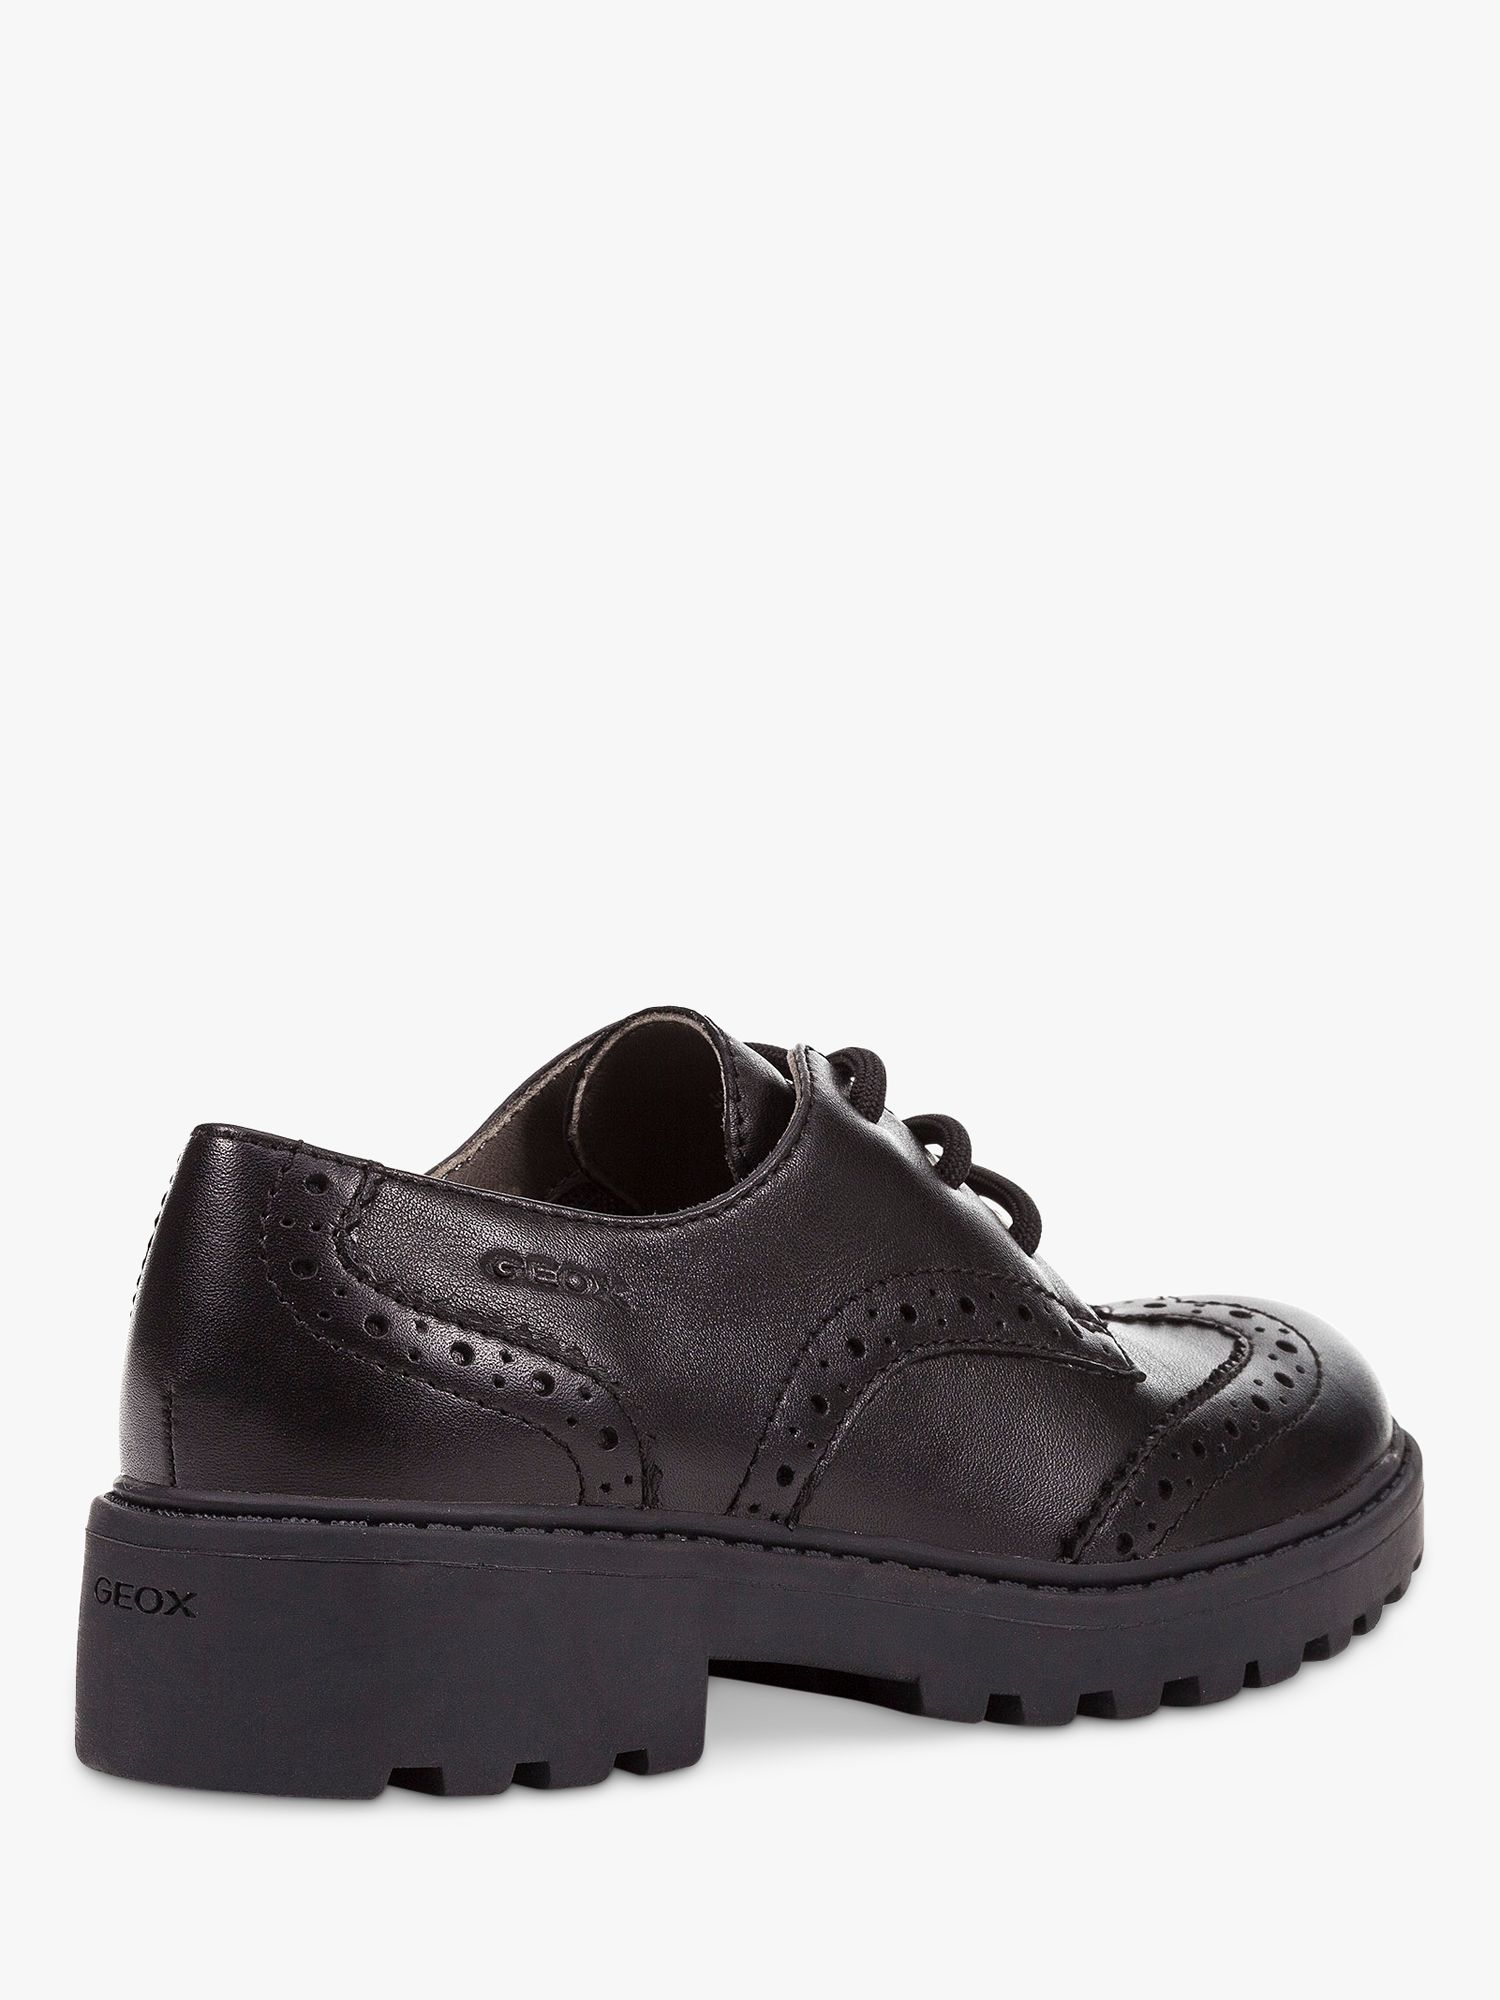 Geox Kids' Casey Lace Up Brogue School Shoes, Black, 38